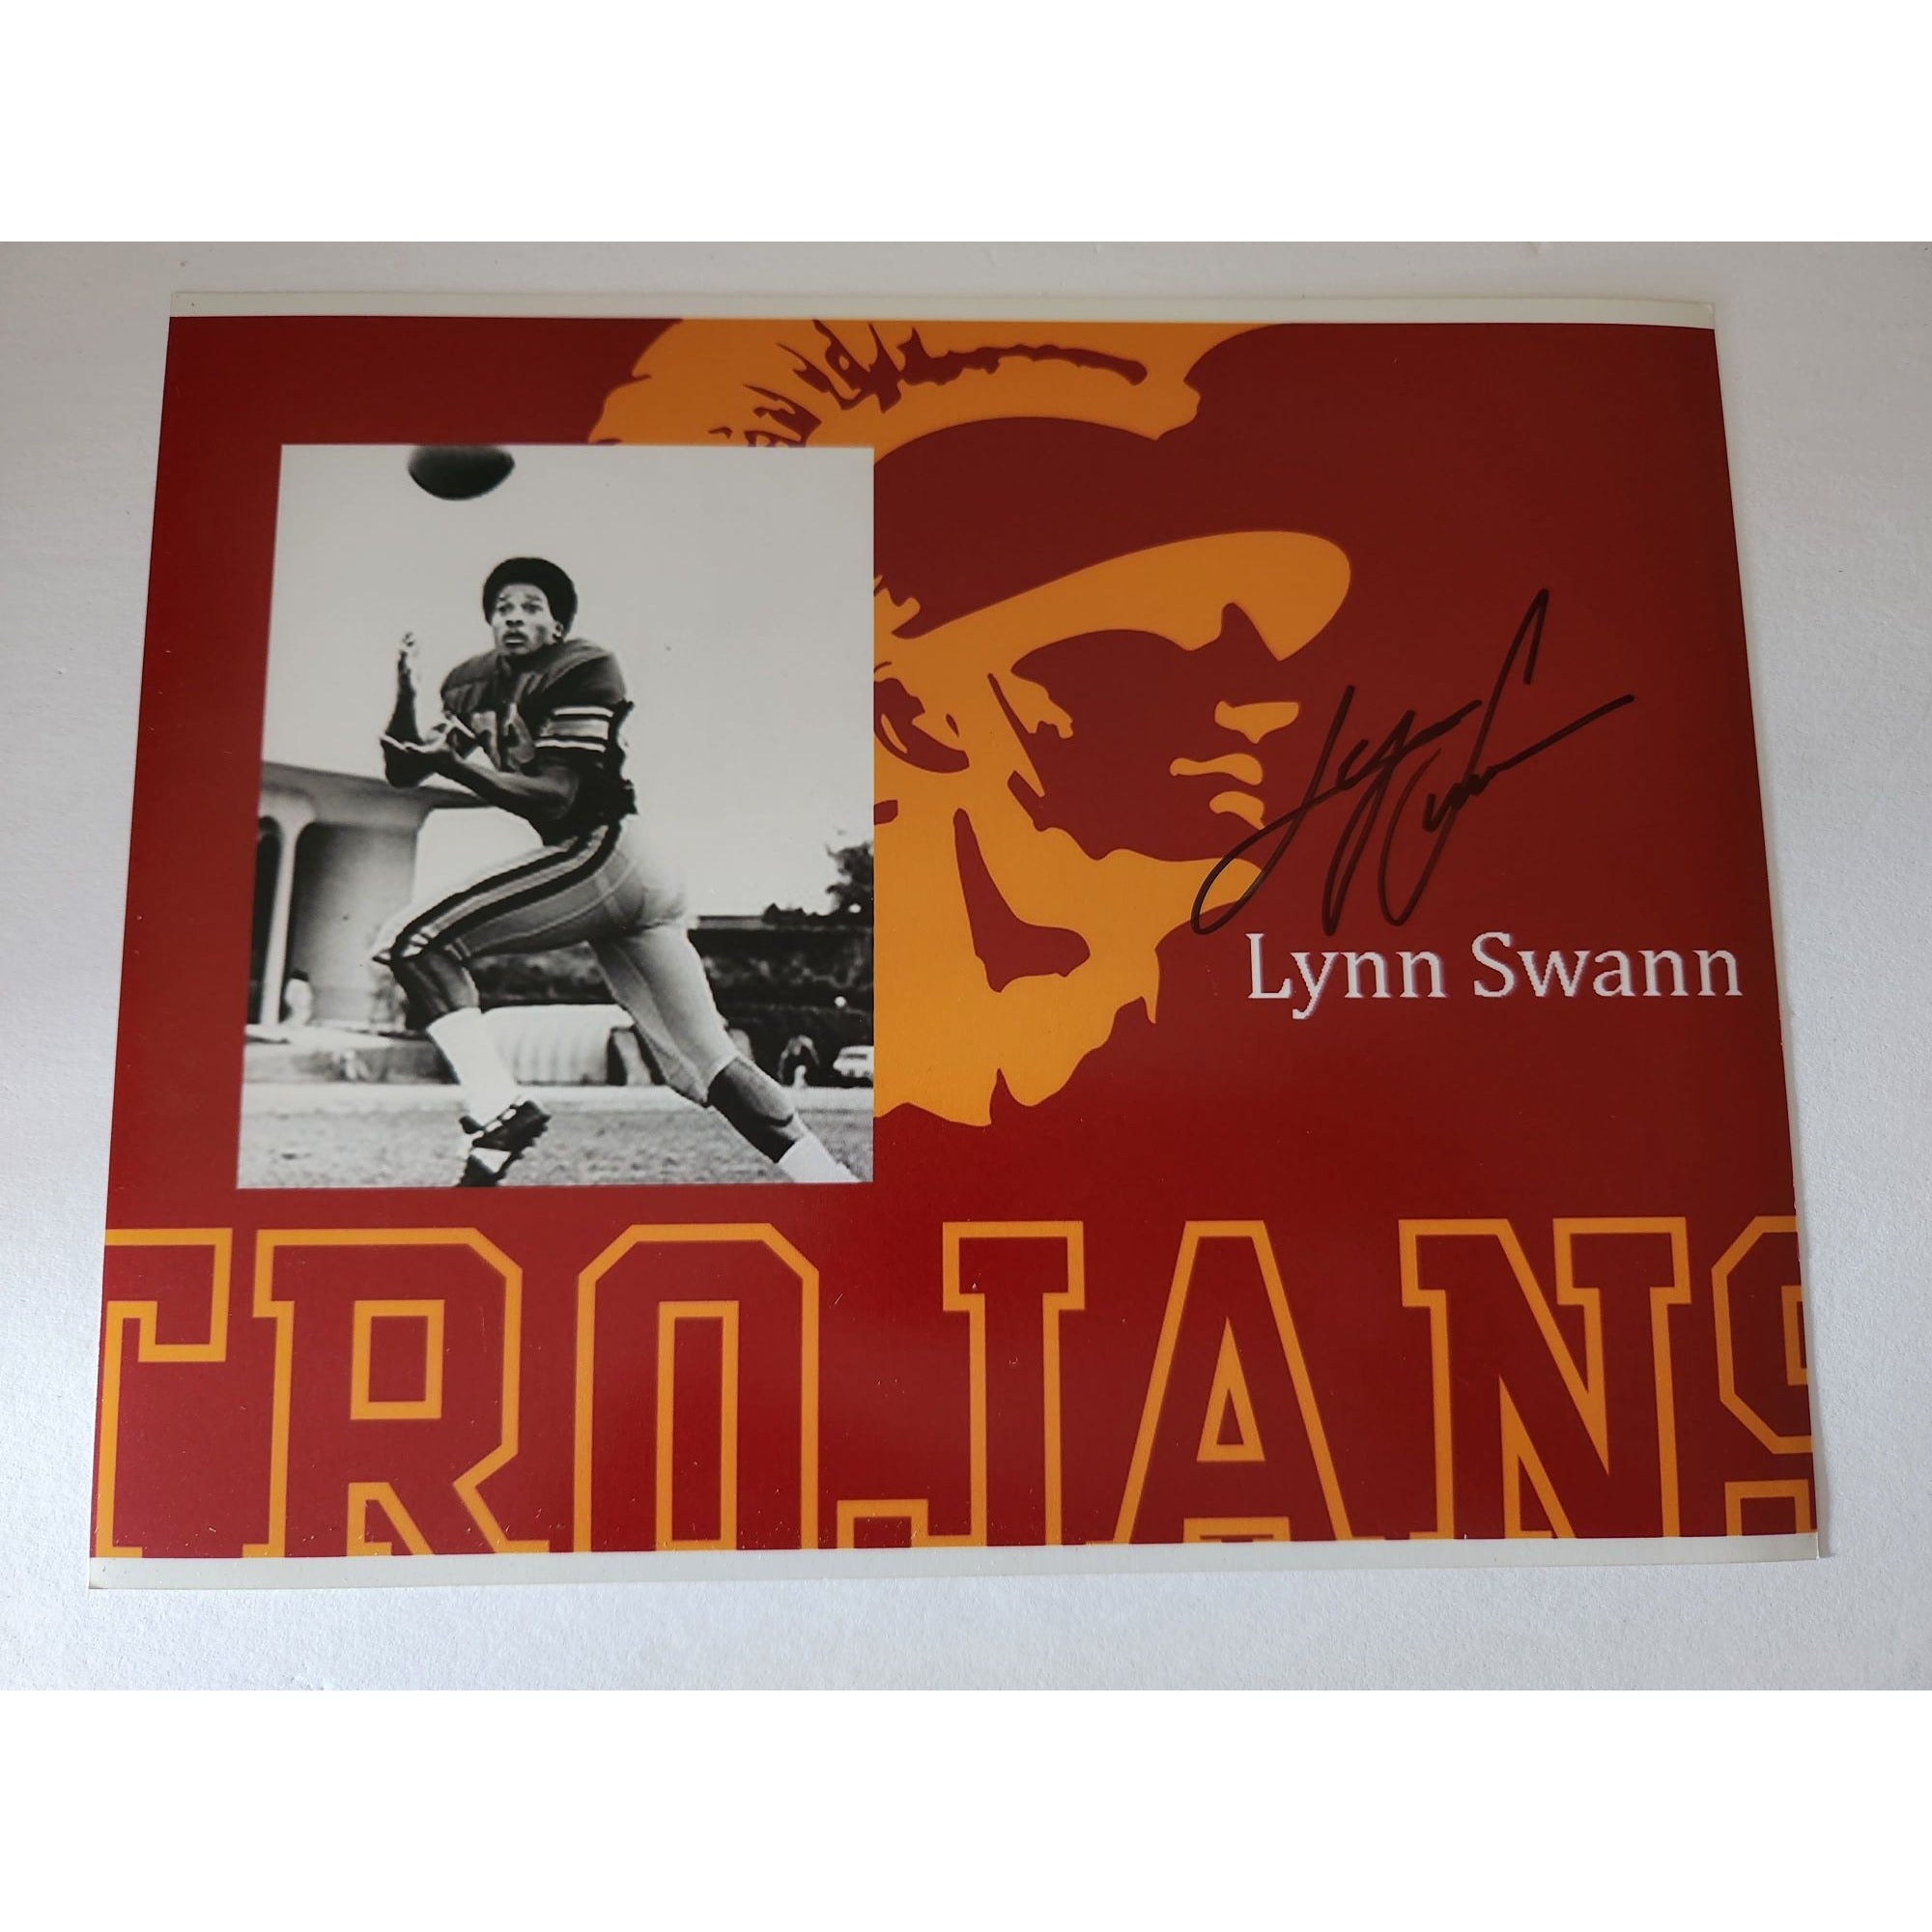 Lynn Swann University of Southern California Trojans 8x10 photo signed